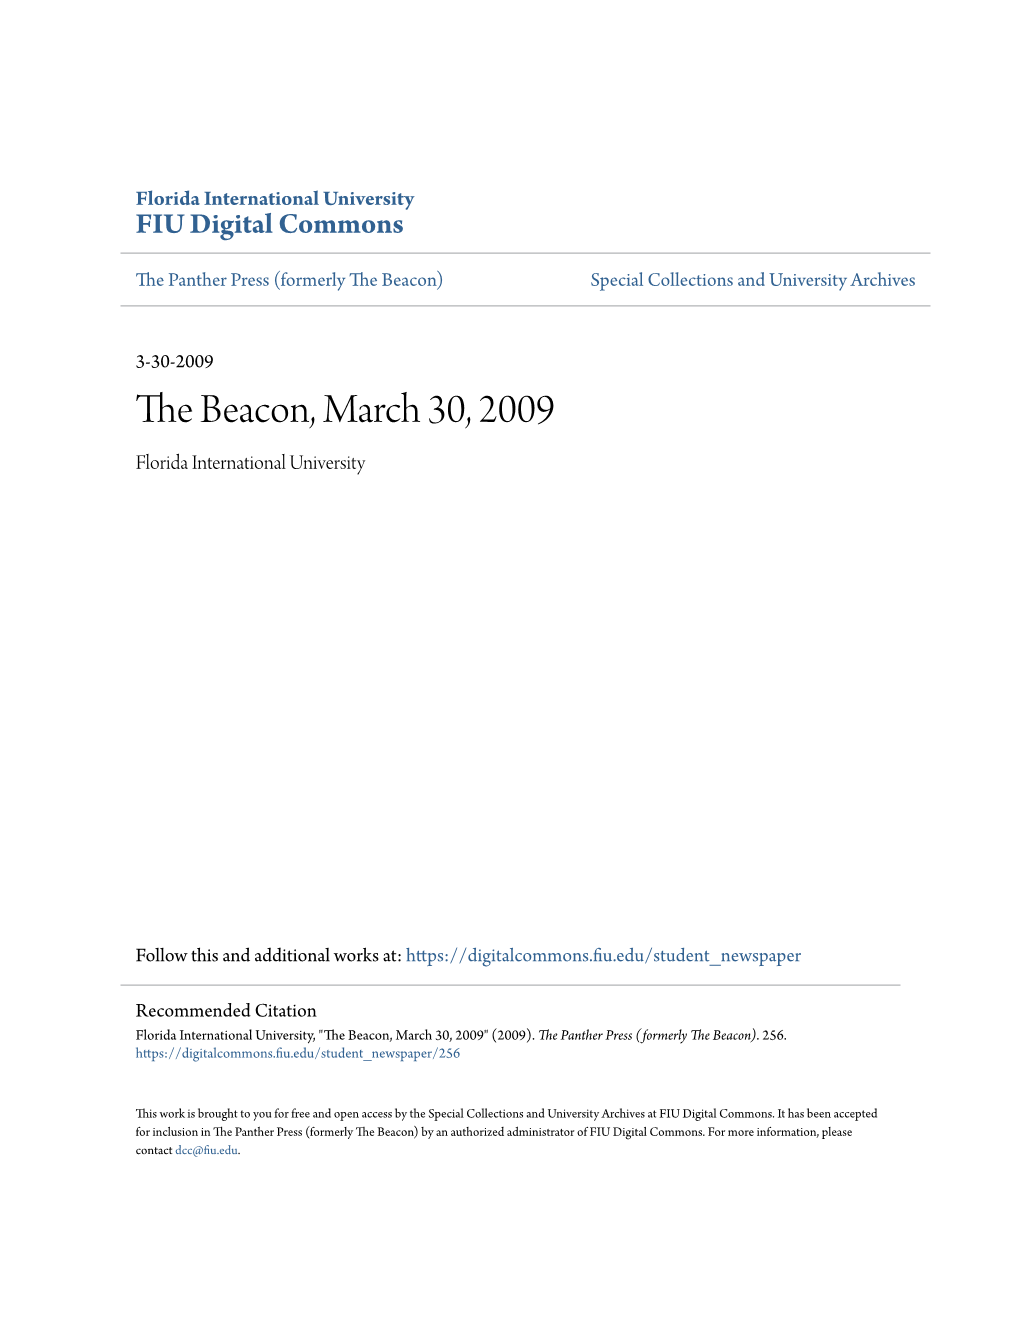 The Beacon, March 30, 2009 Florida International University